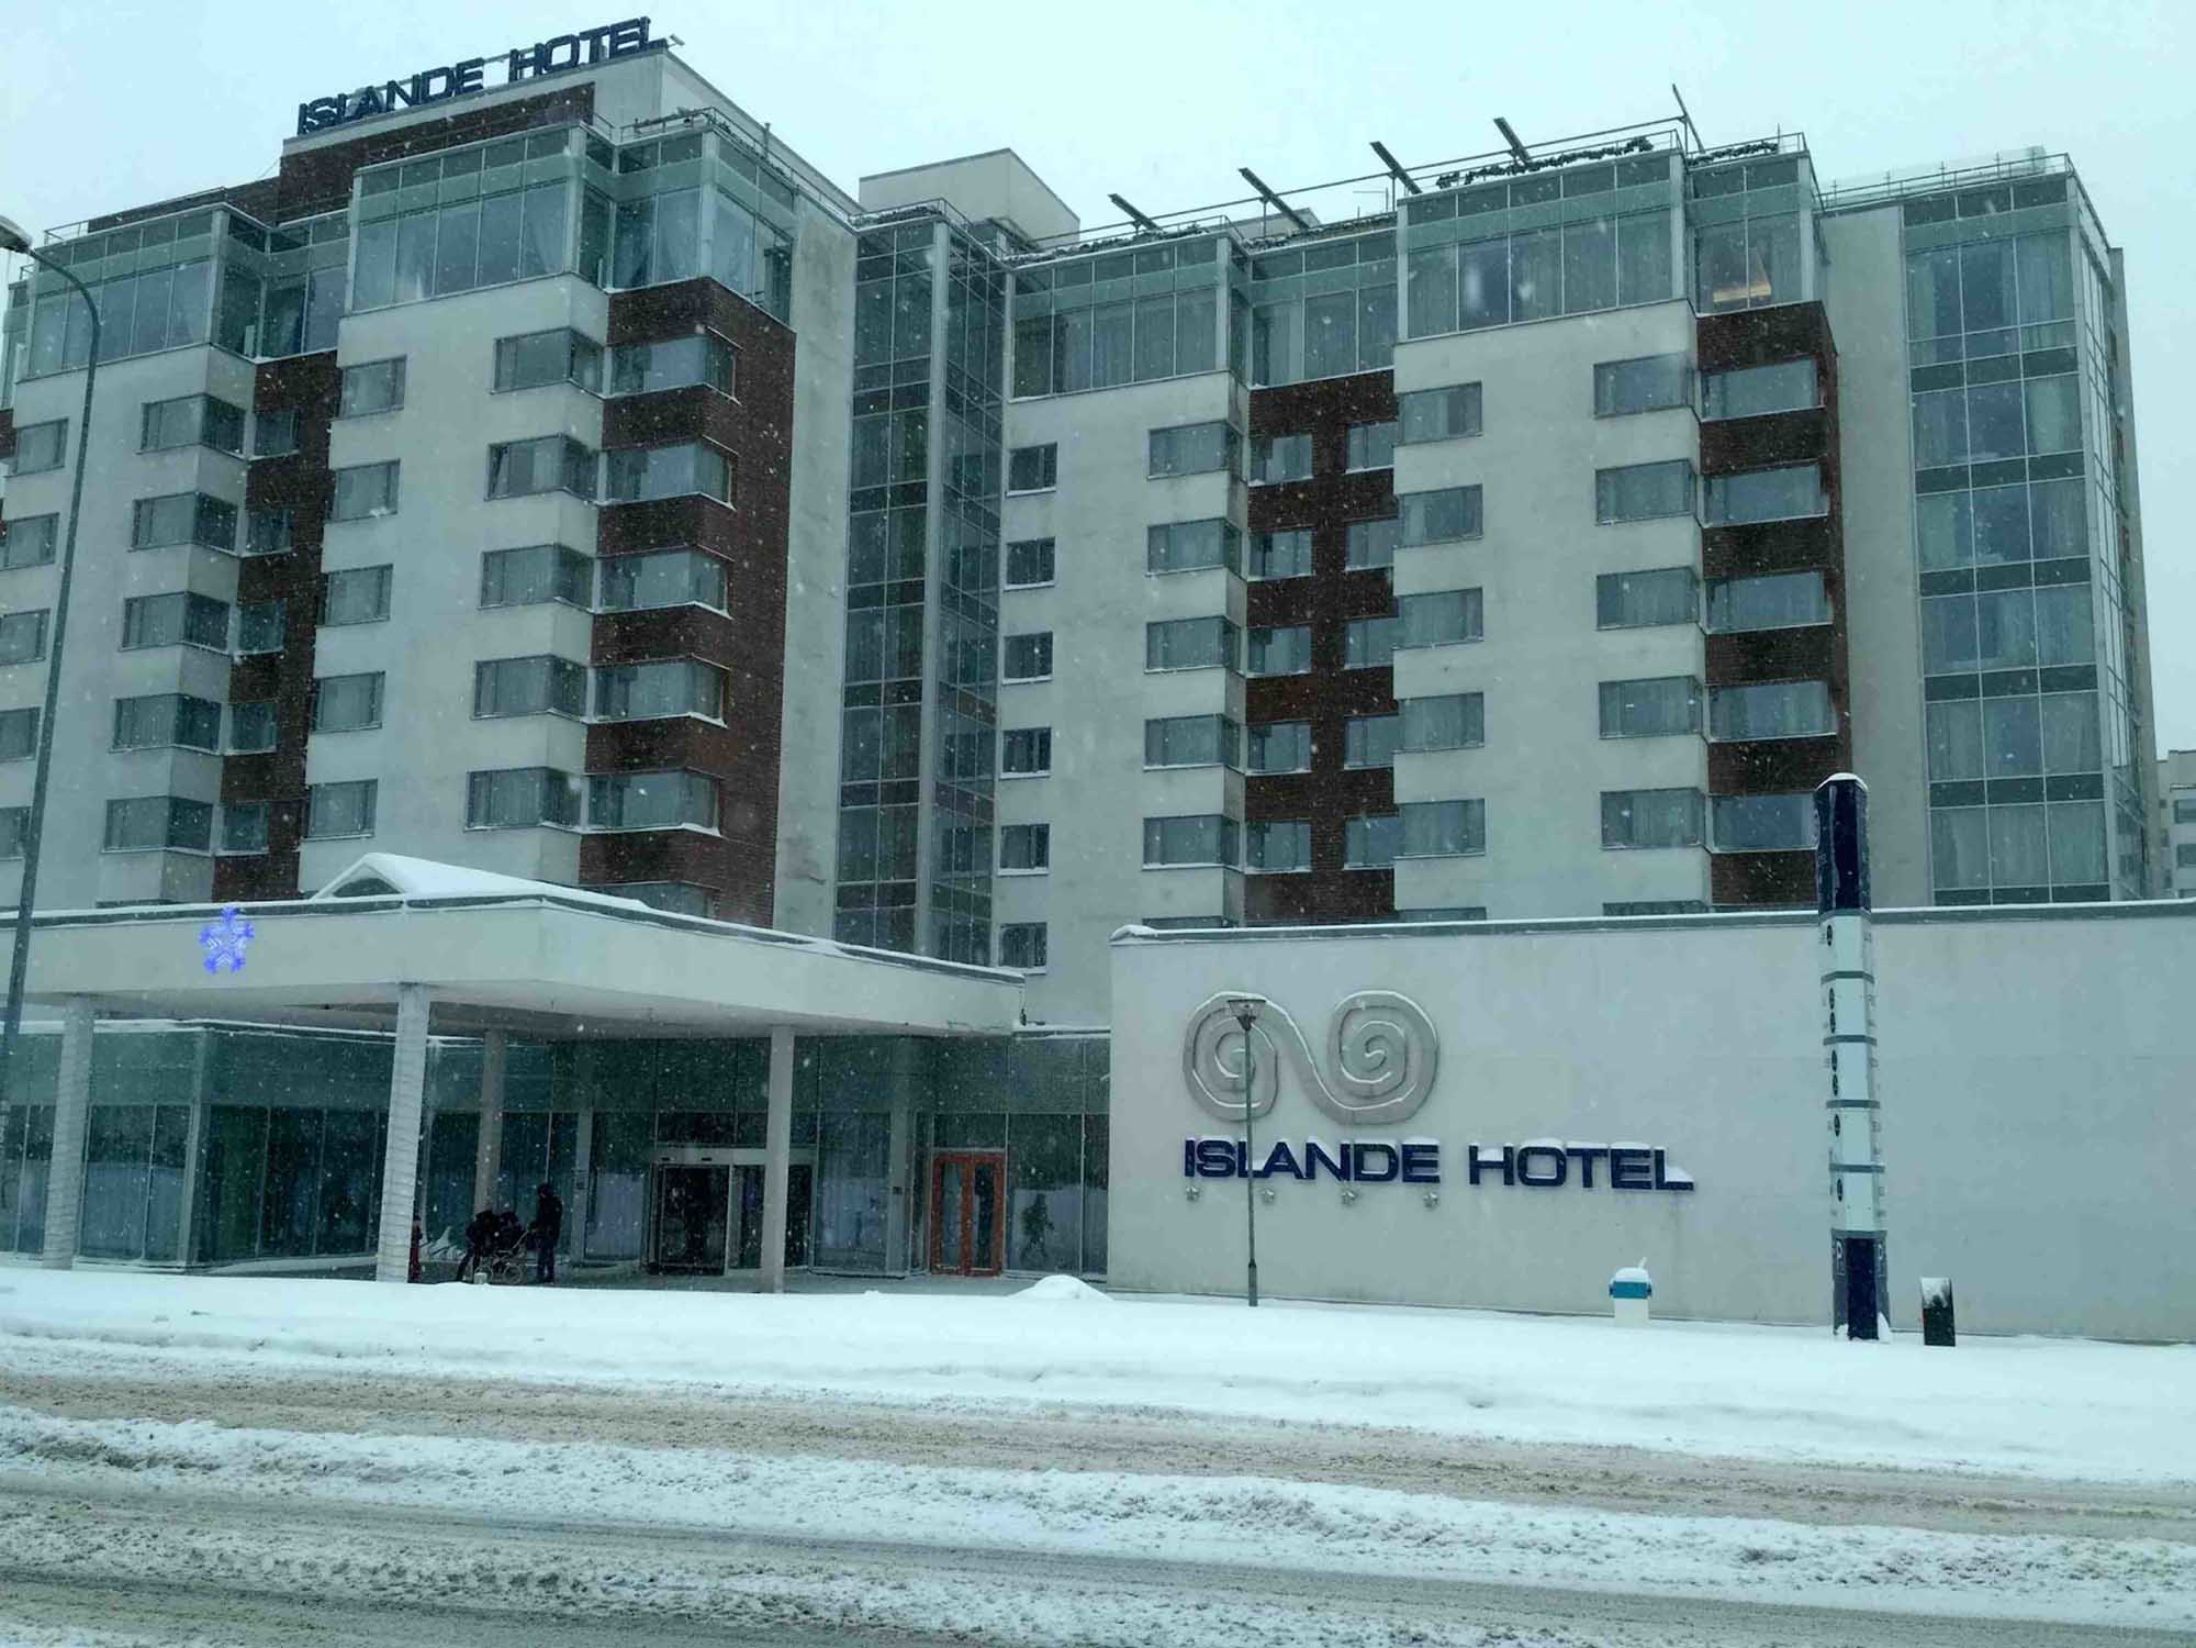 Riga Islande Hotel - Best Hotels in Riga